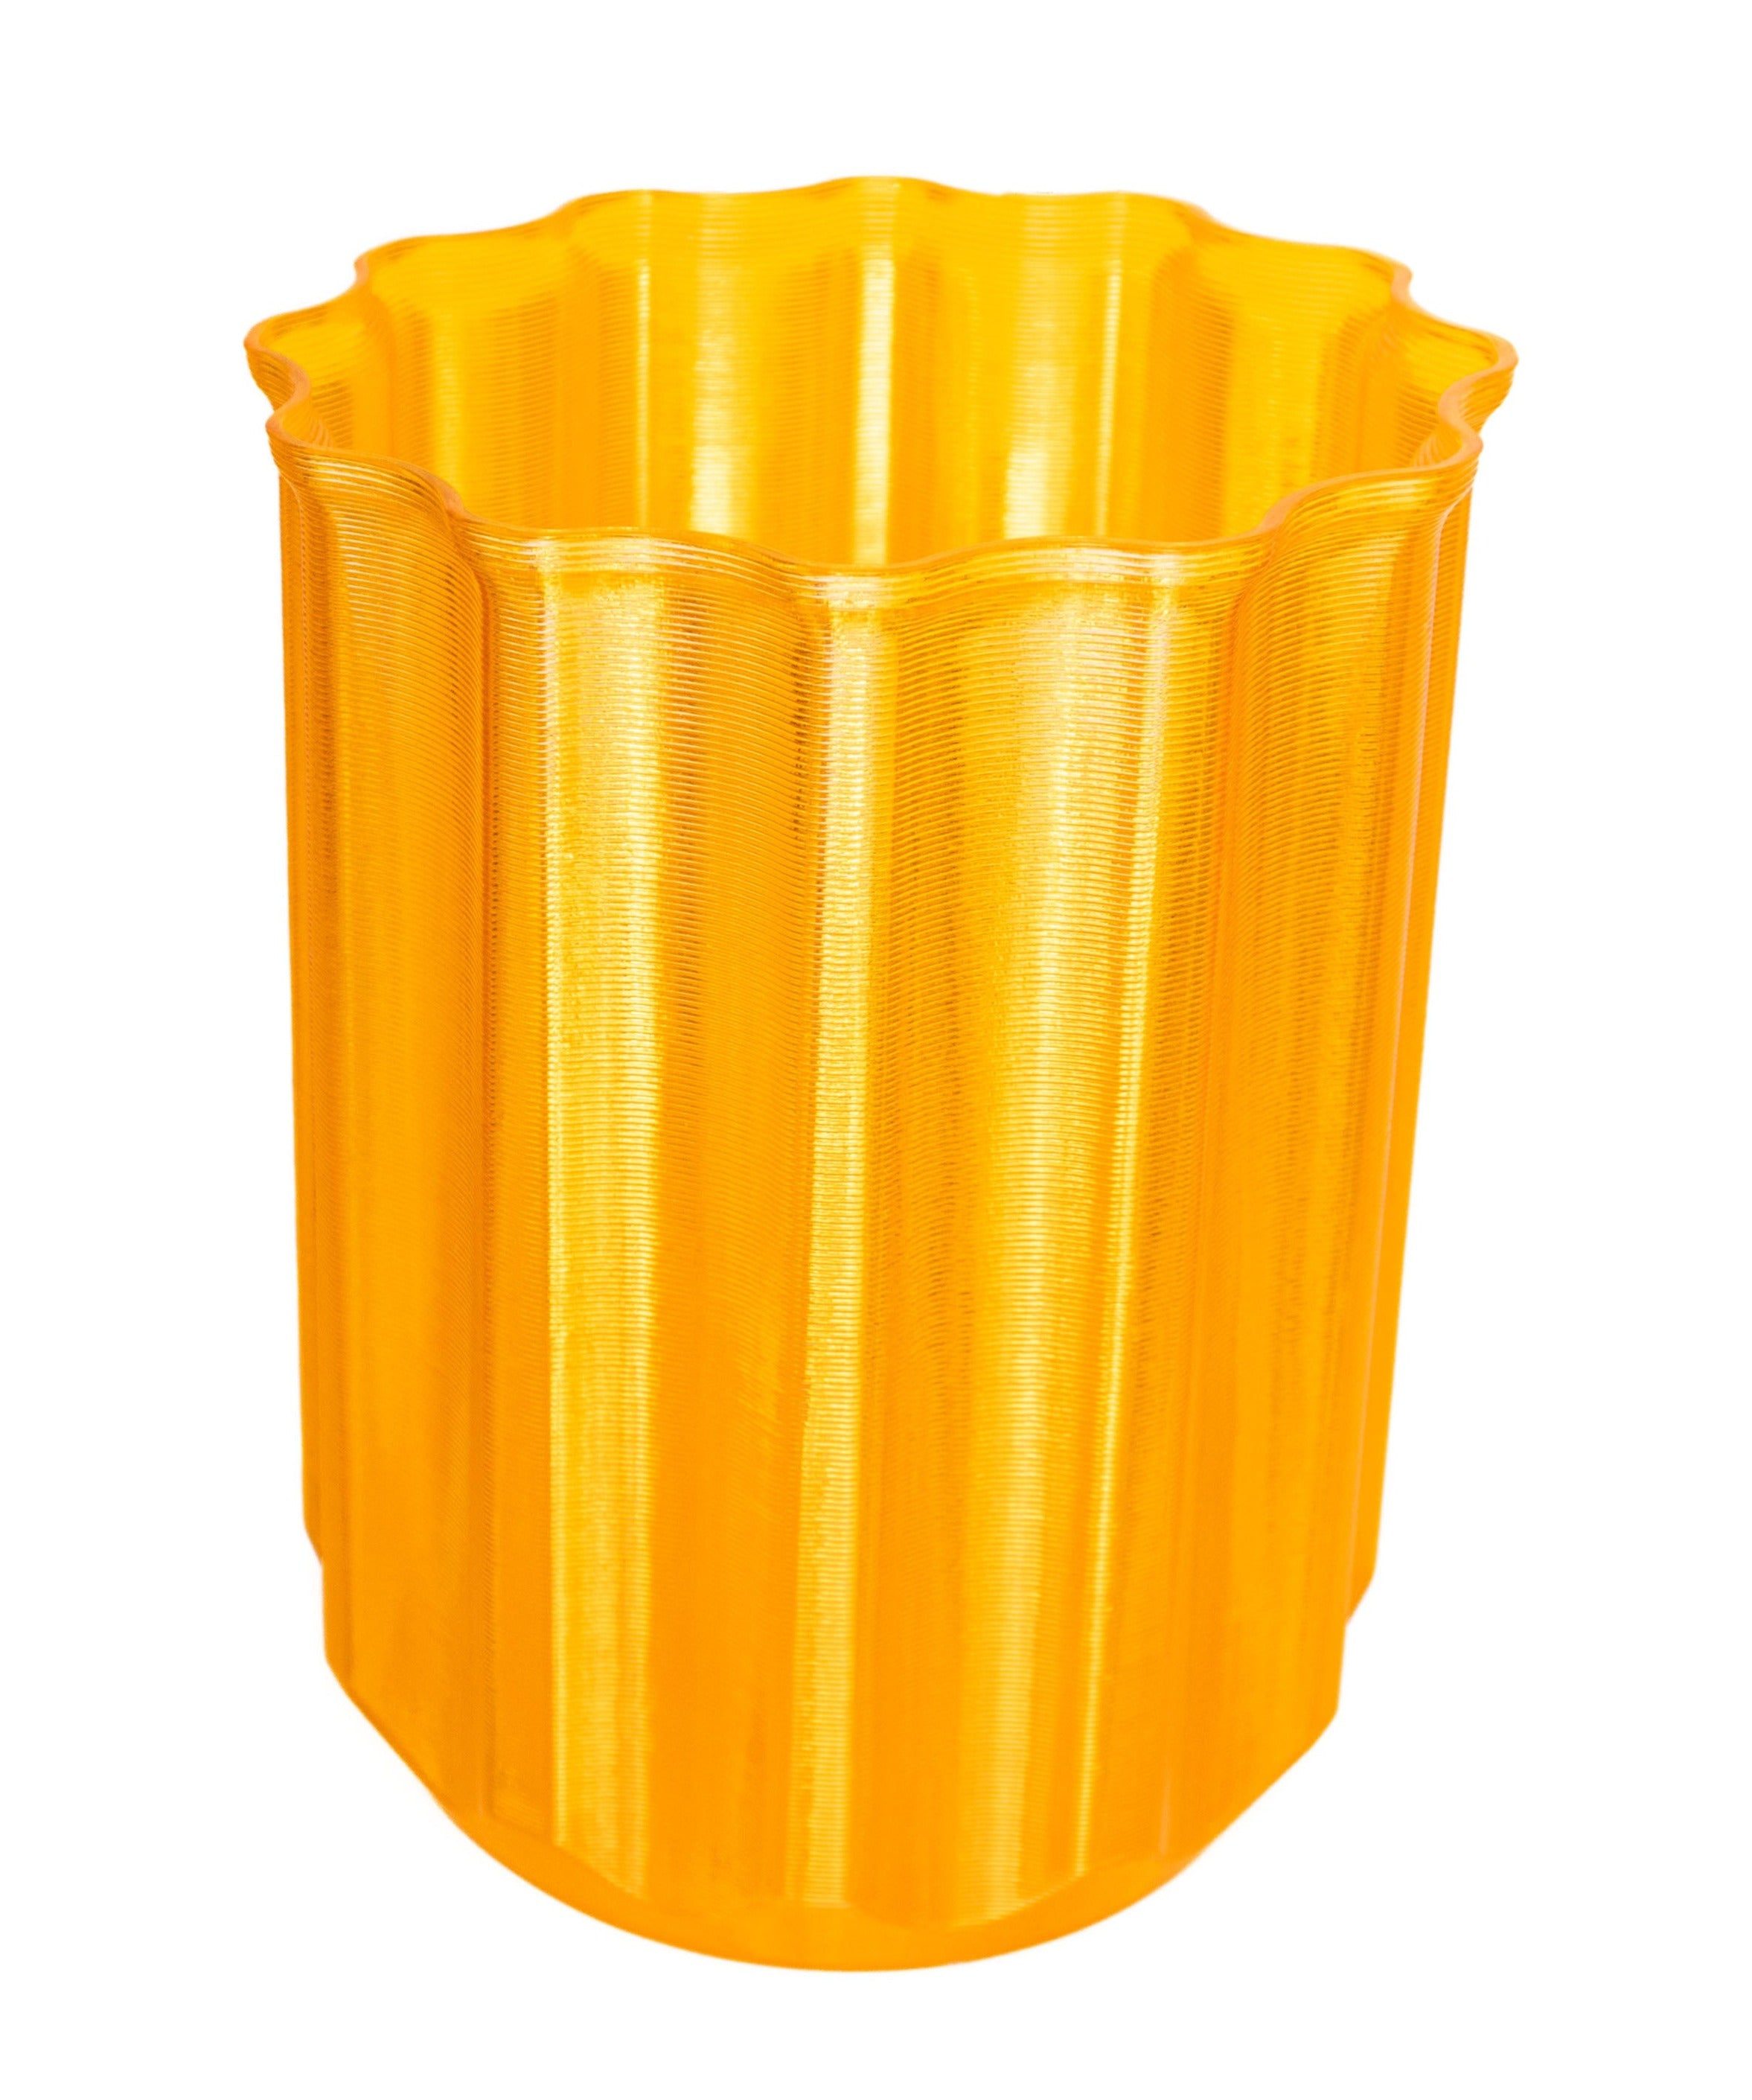 3D Waste basket Semi-Transparent Yellow Floral